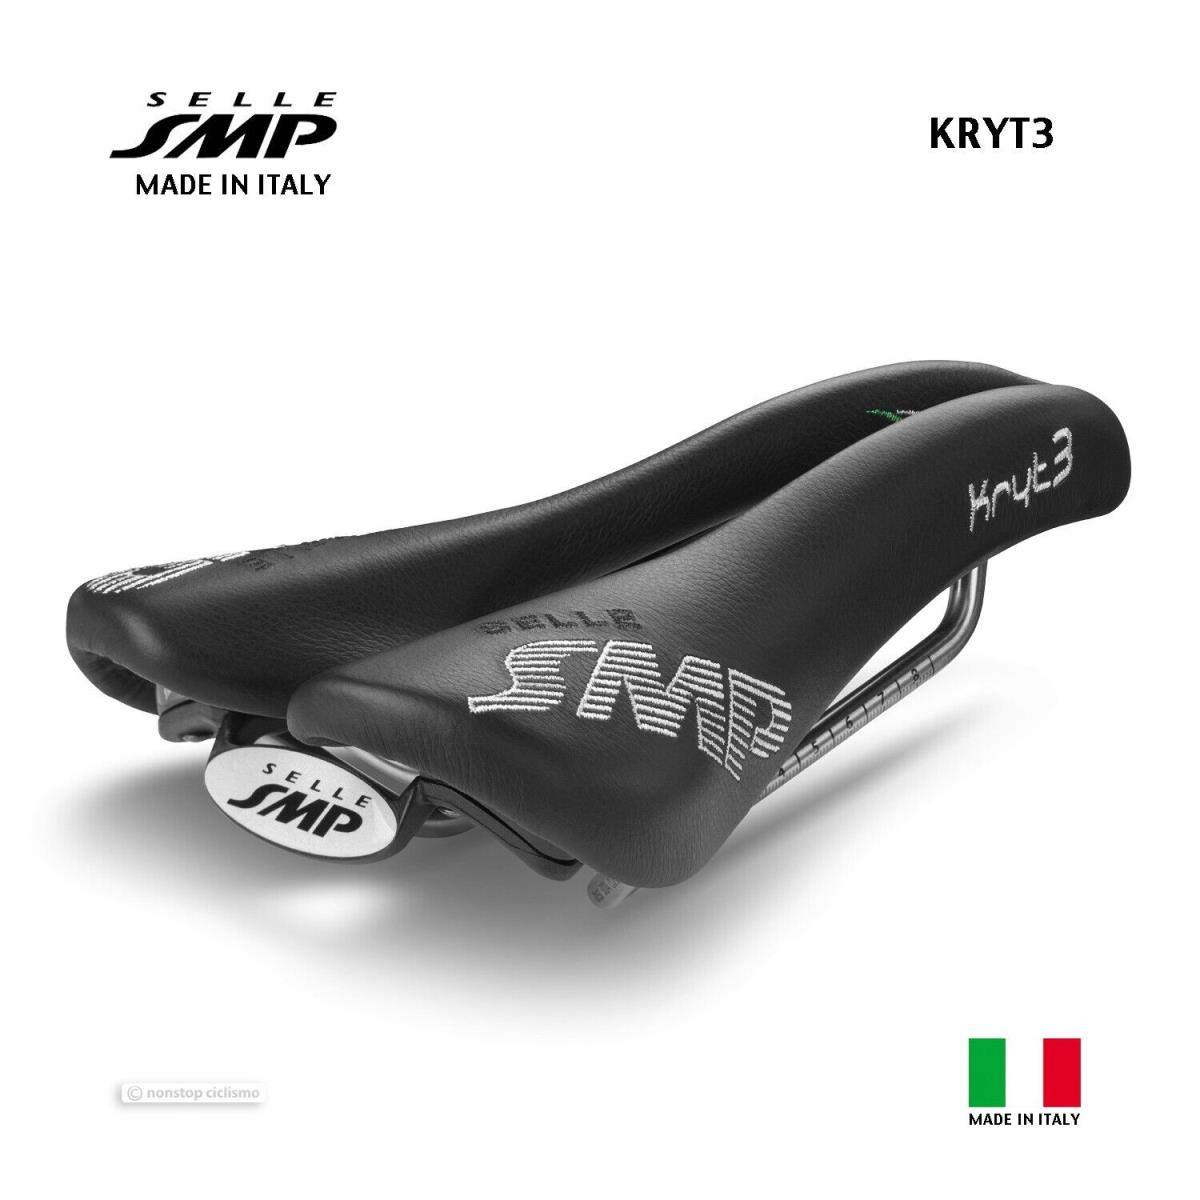 Selle Smp KRYT3 Criterum Saddle : Black - Made IN Italy